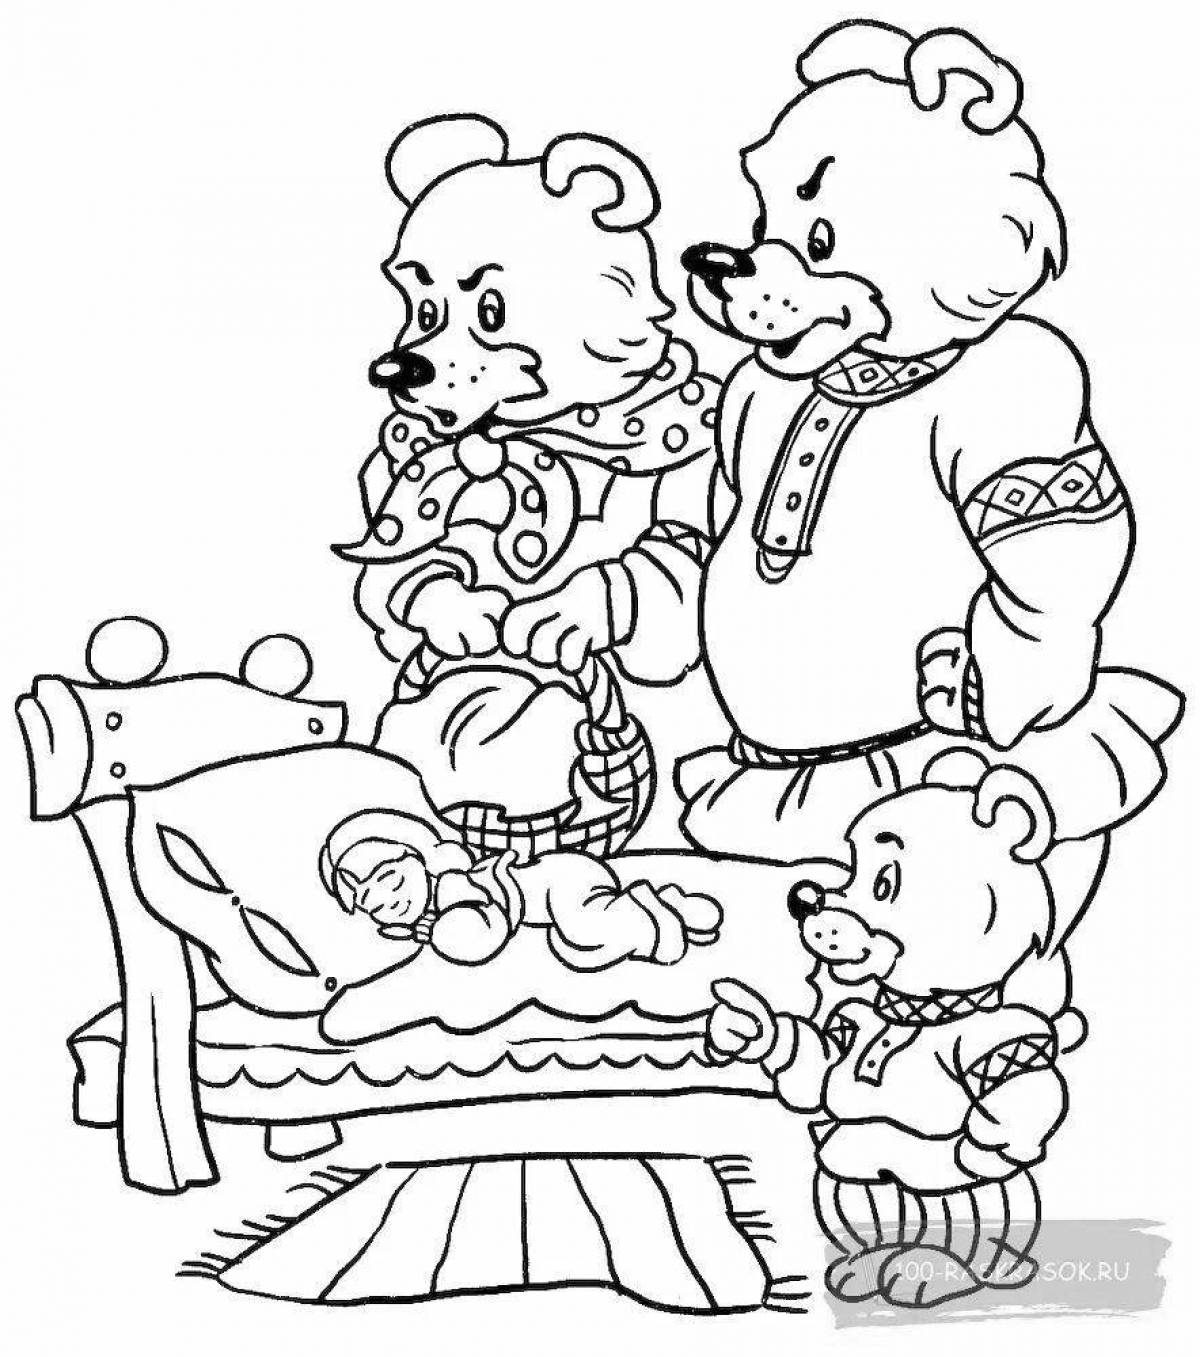 3 bears fun coloring book for teens